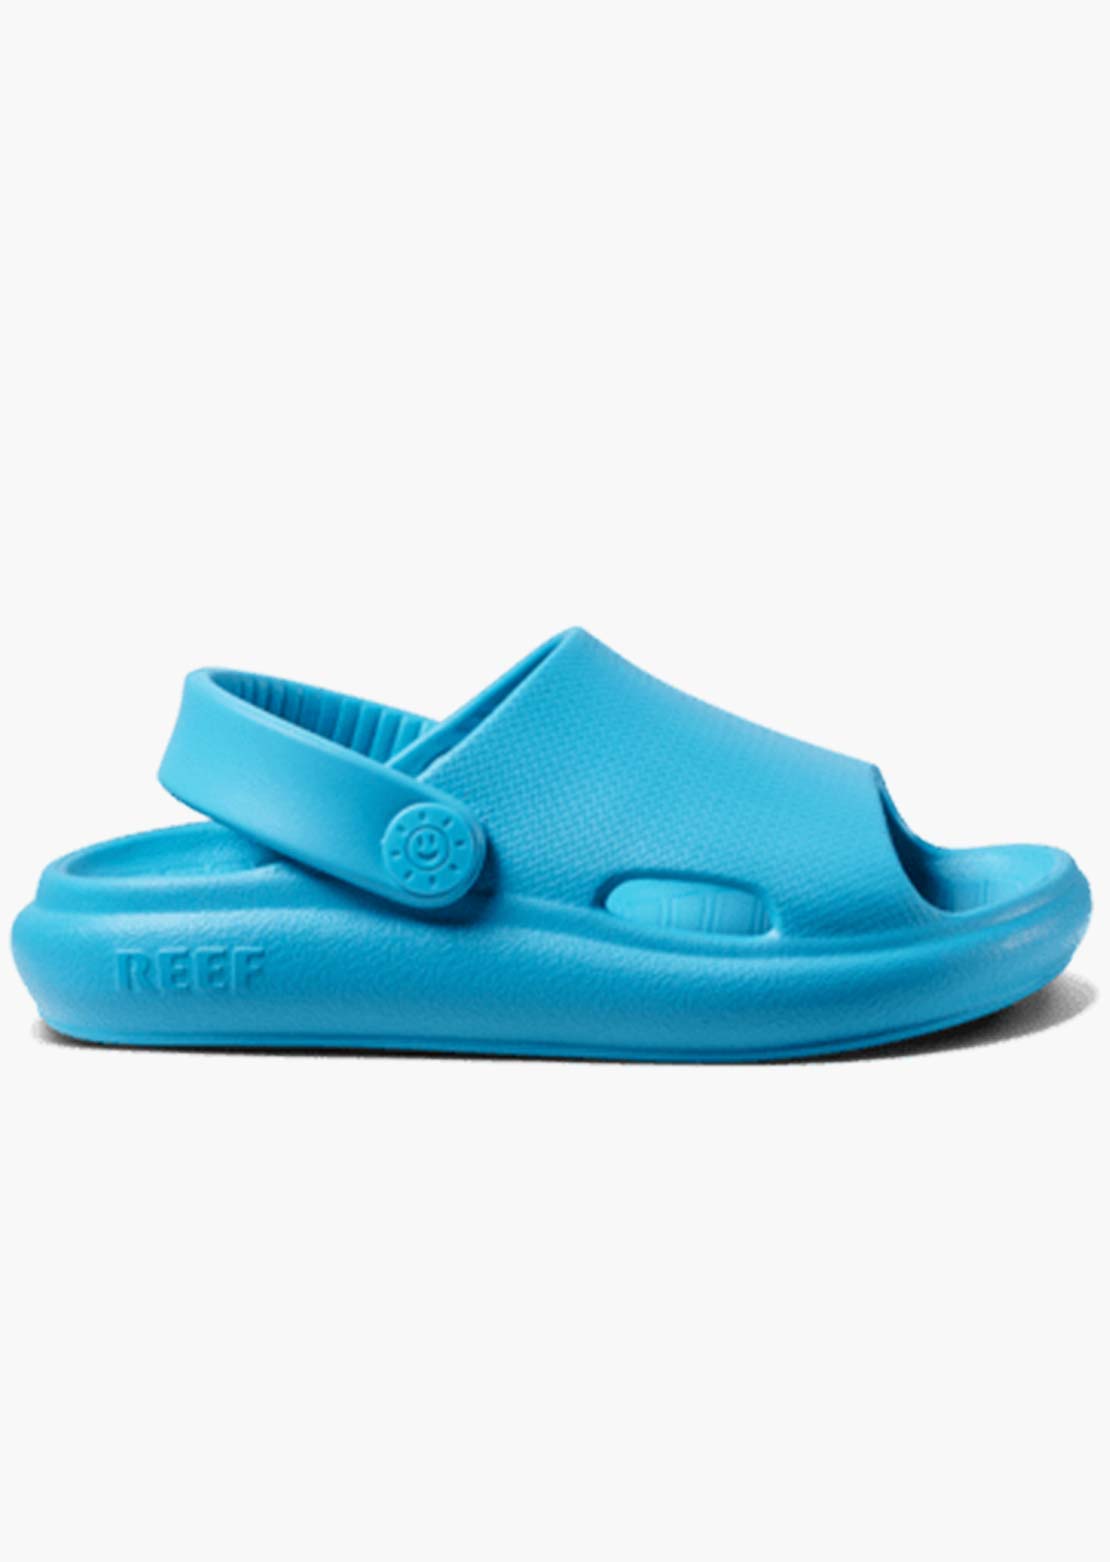 Reef Toddler Little Rio Slide Sandals Scuba Blue